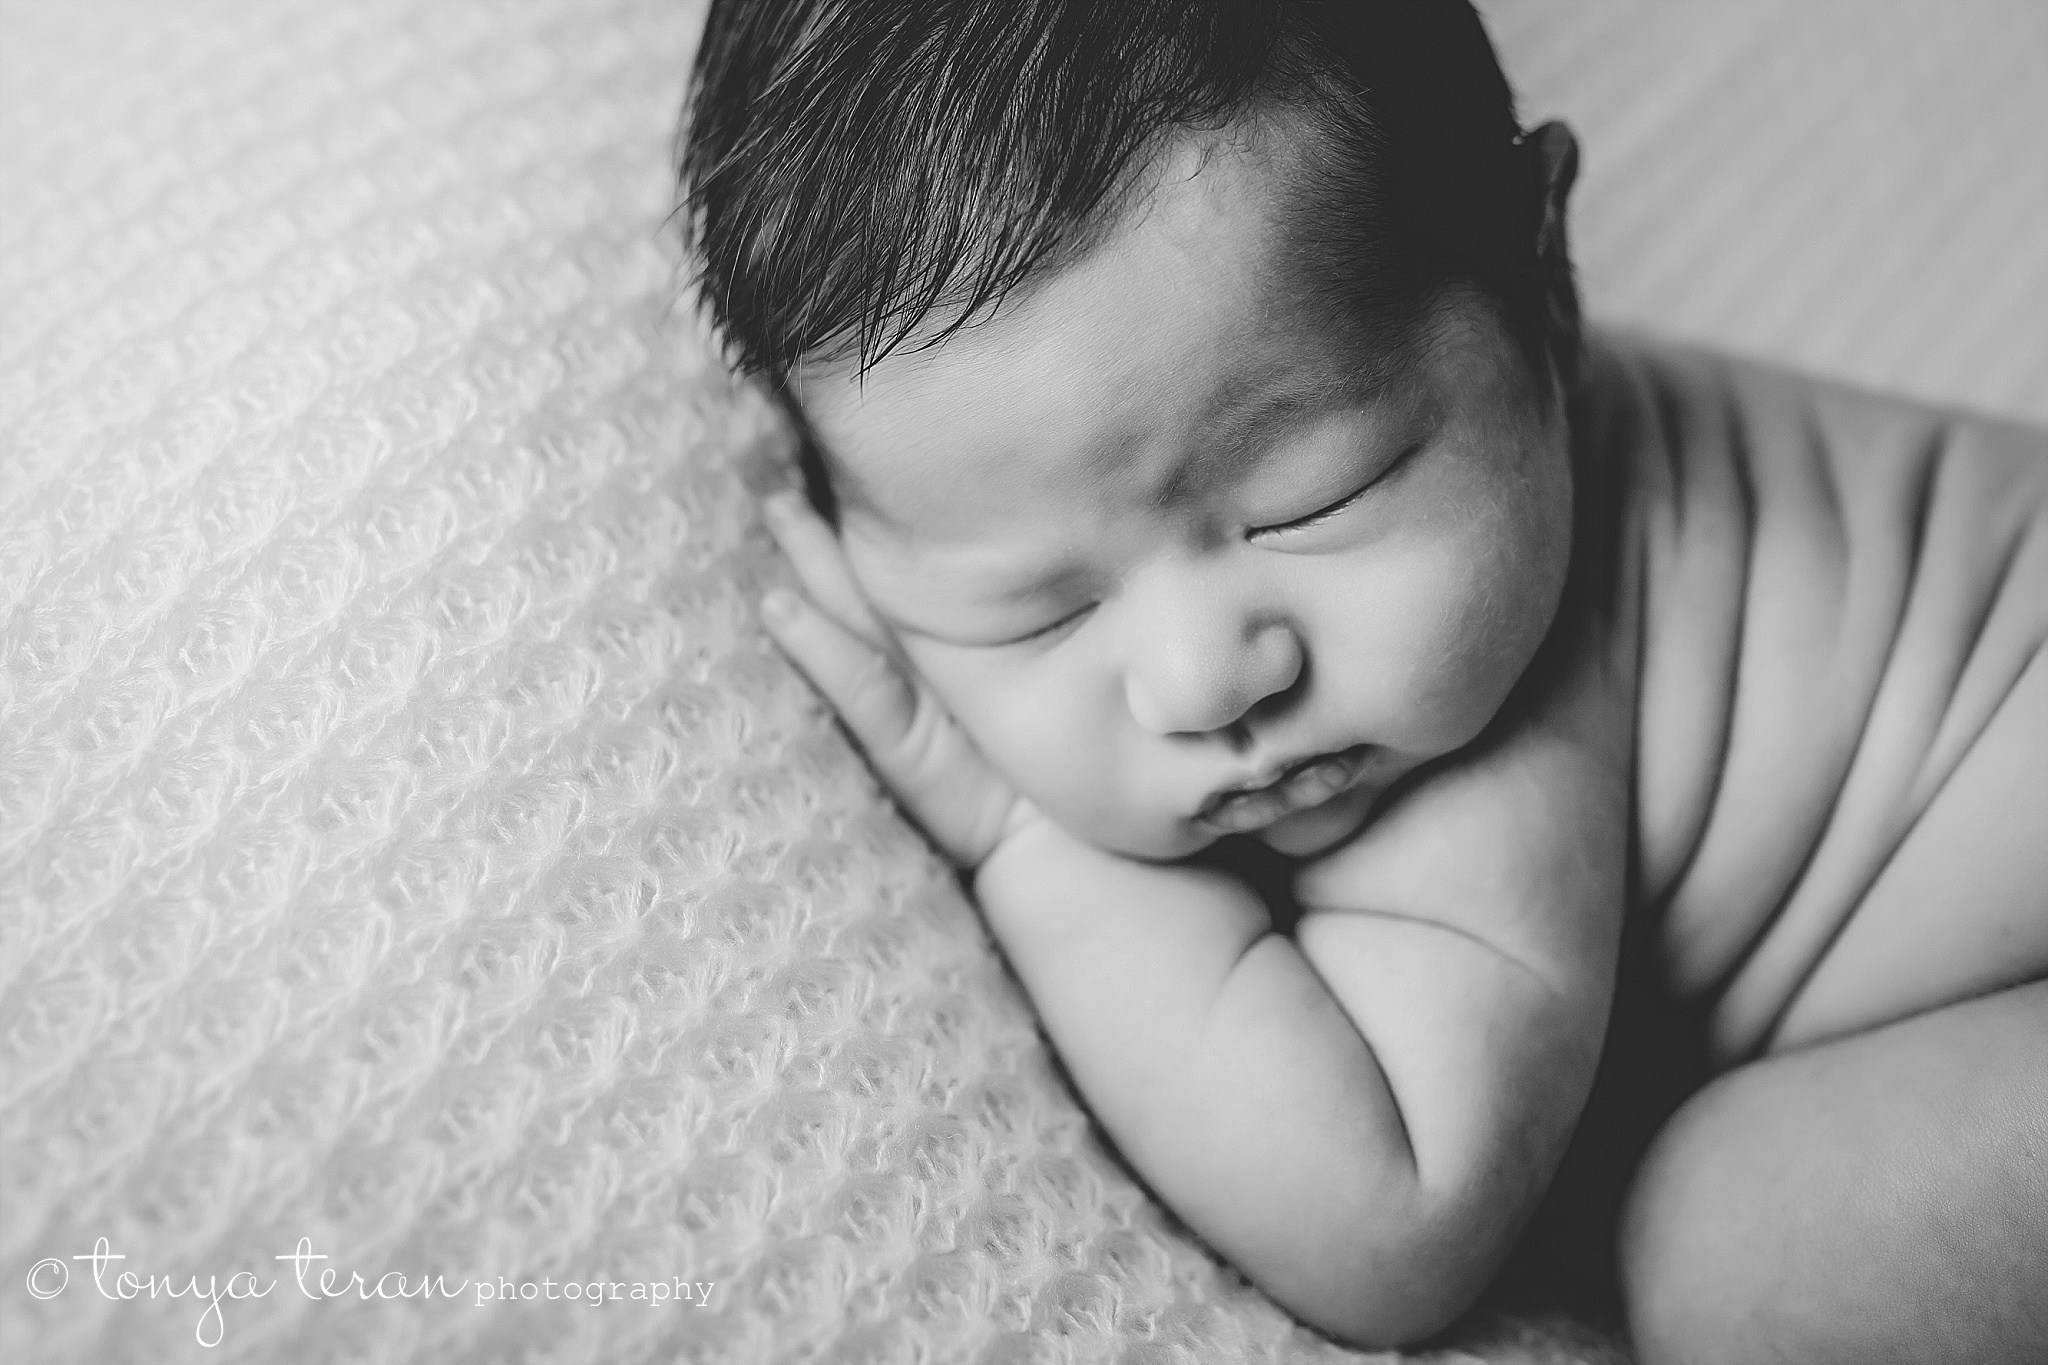 Newborn Photo Session | Tonya Teran Photography, Washington, DC Newborn, Baby, and Family Photographer